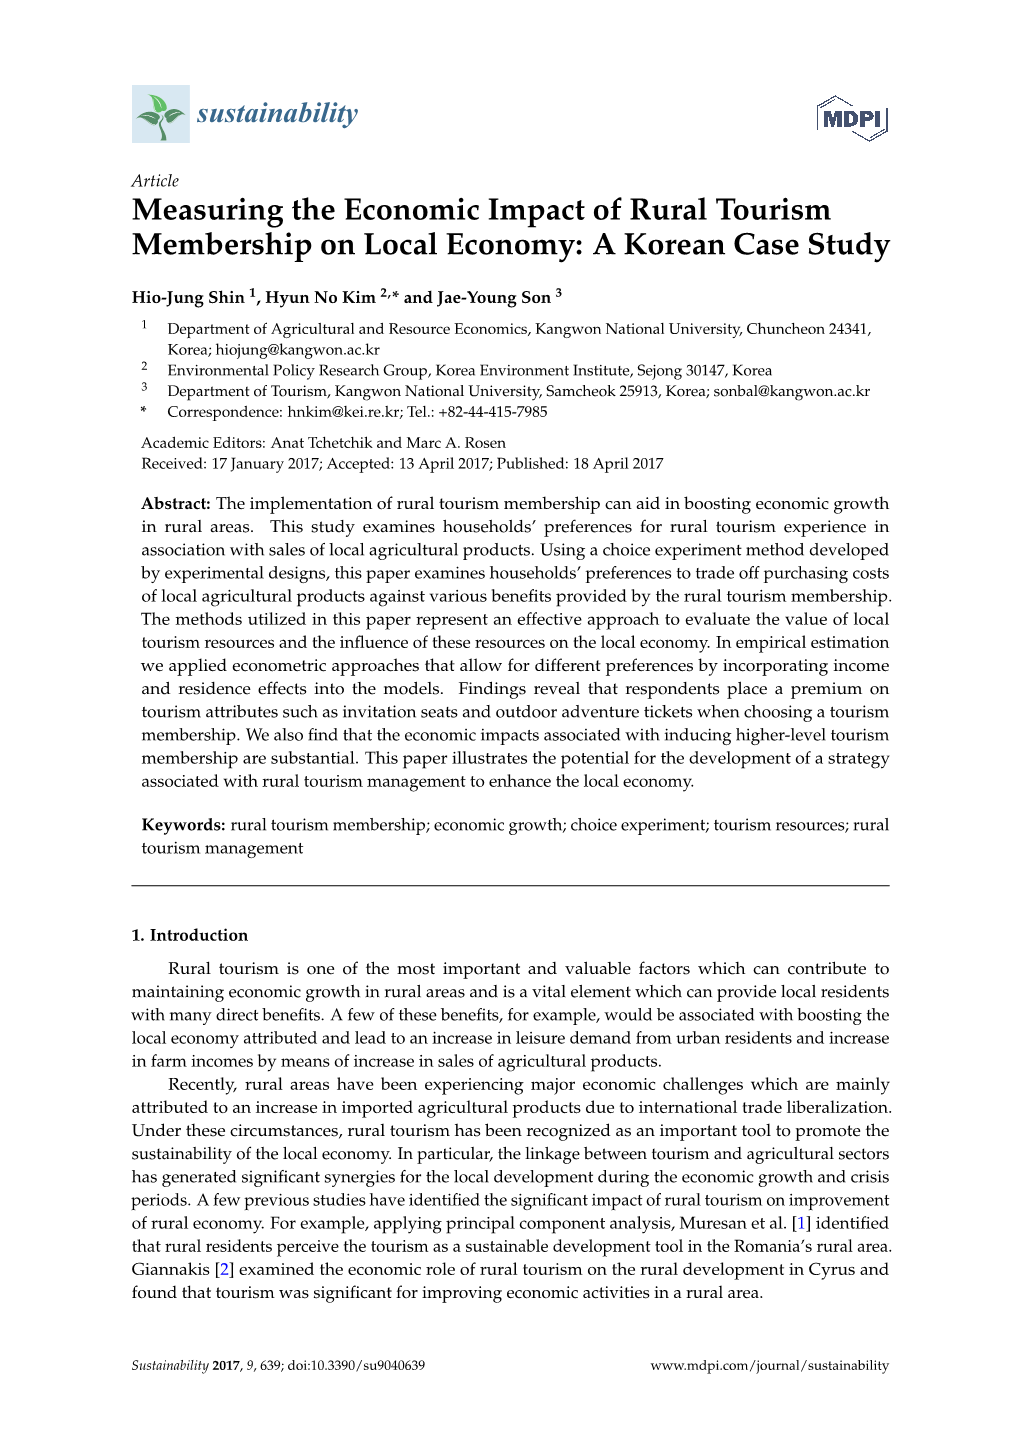 Measuring the Economic Impact of Rural Tourism Membership on Local Economy: a Korean Case Study